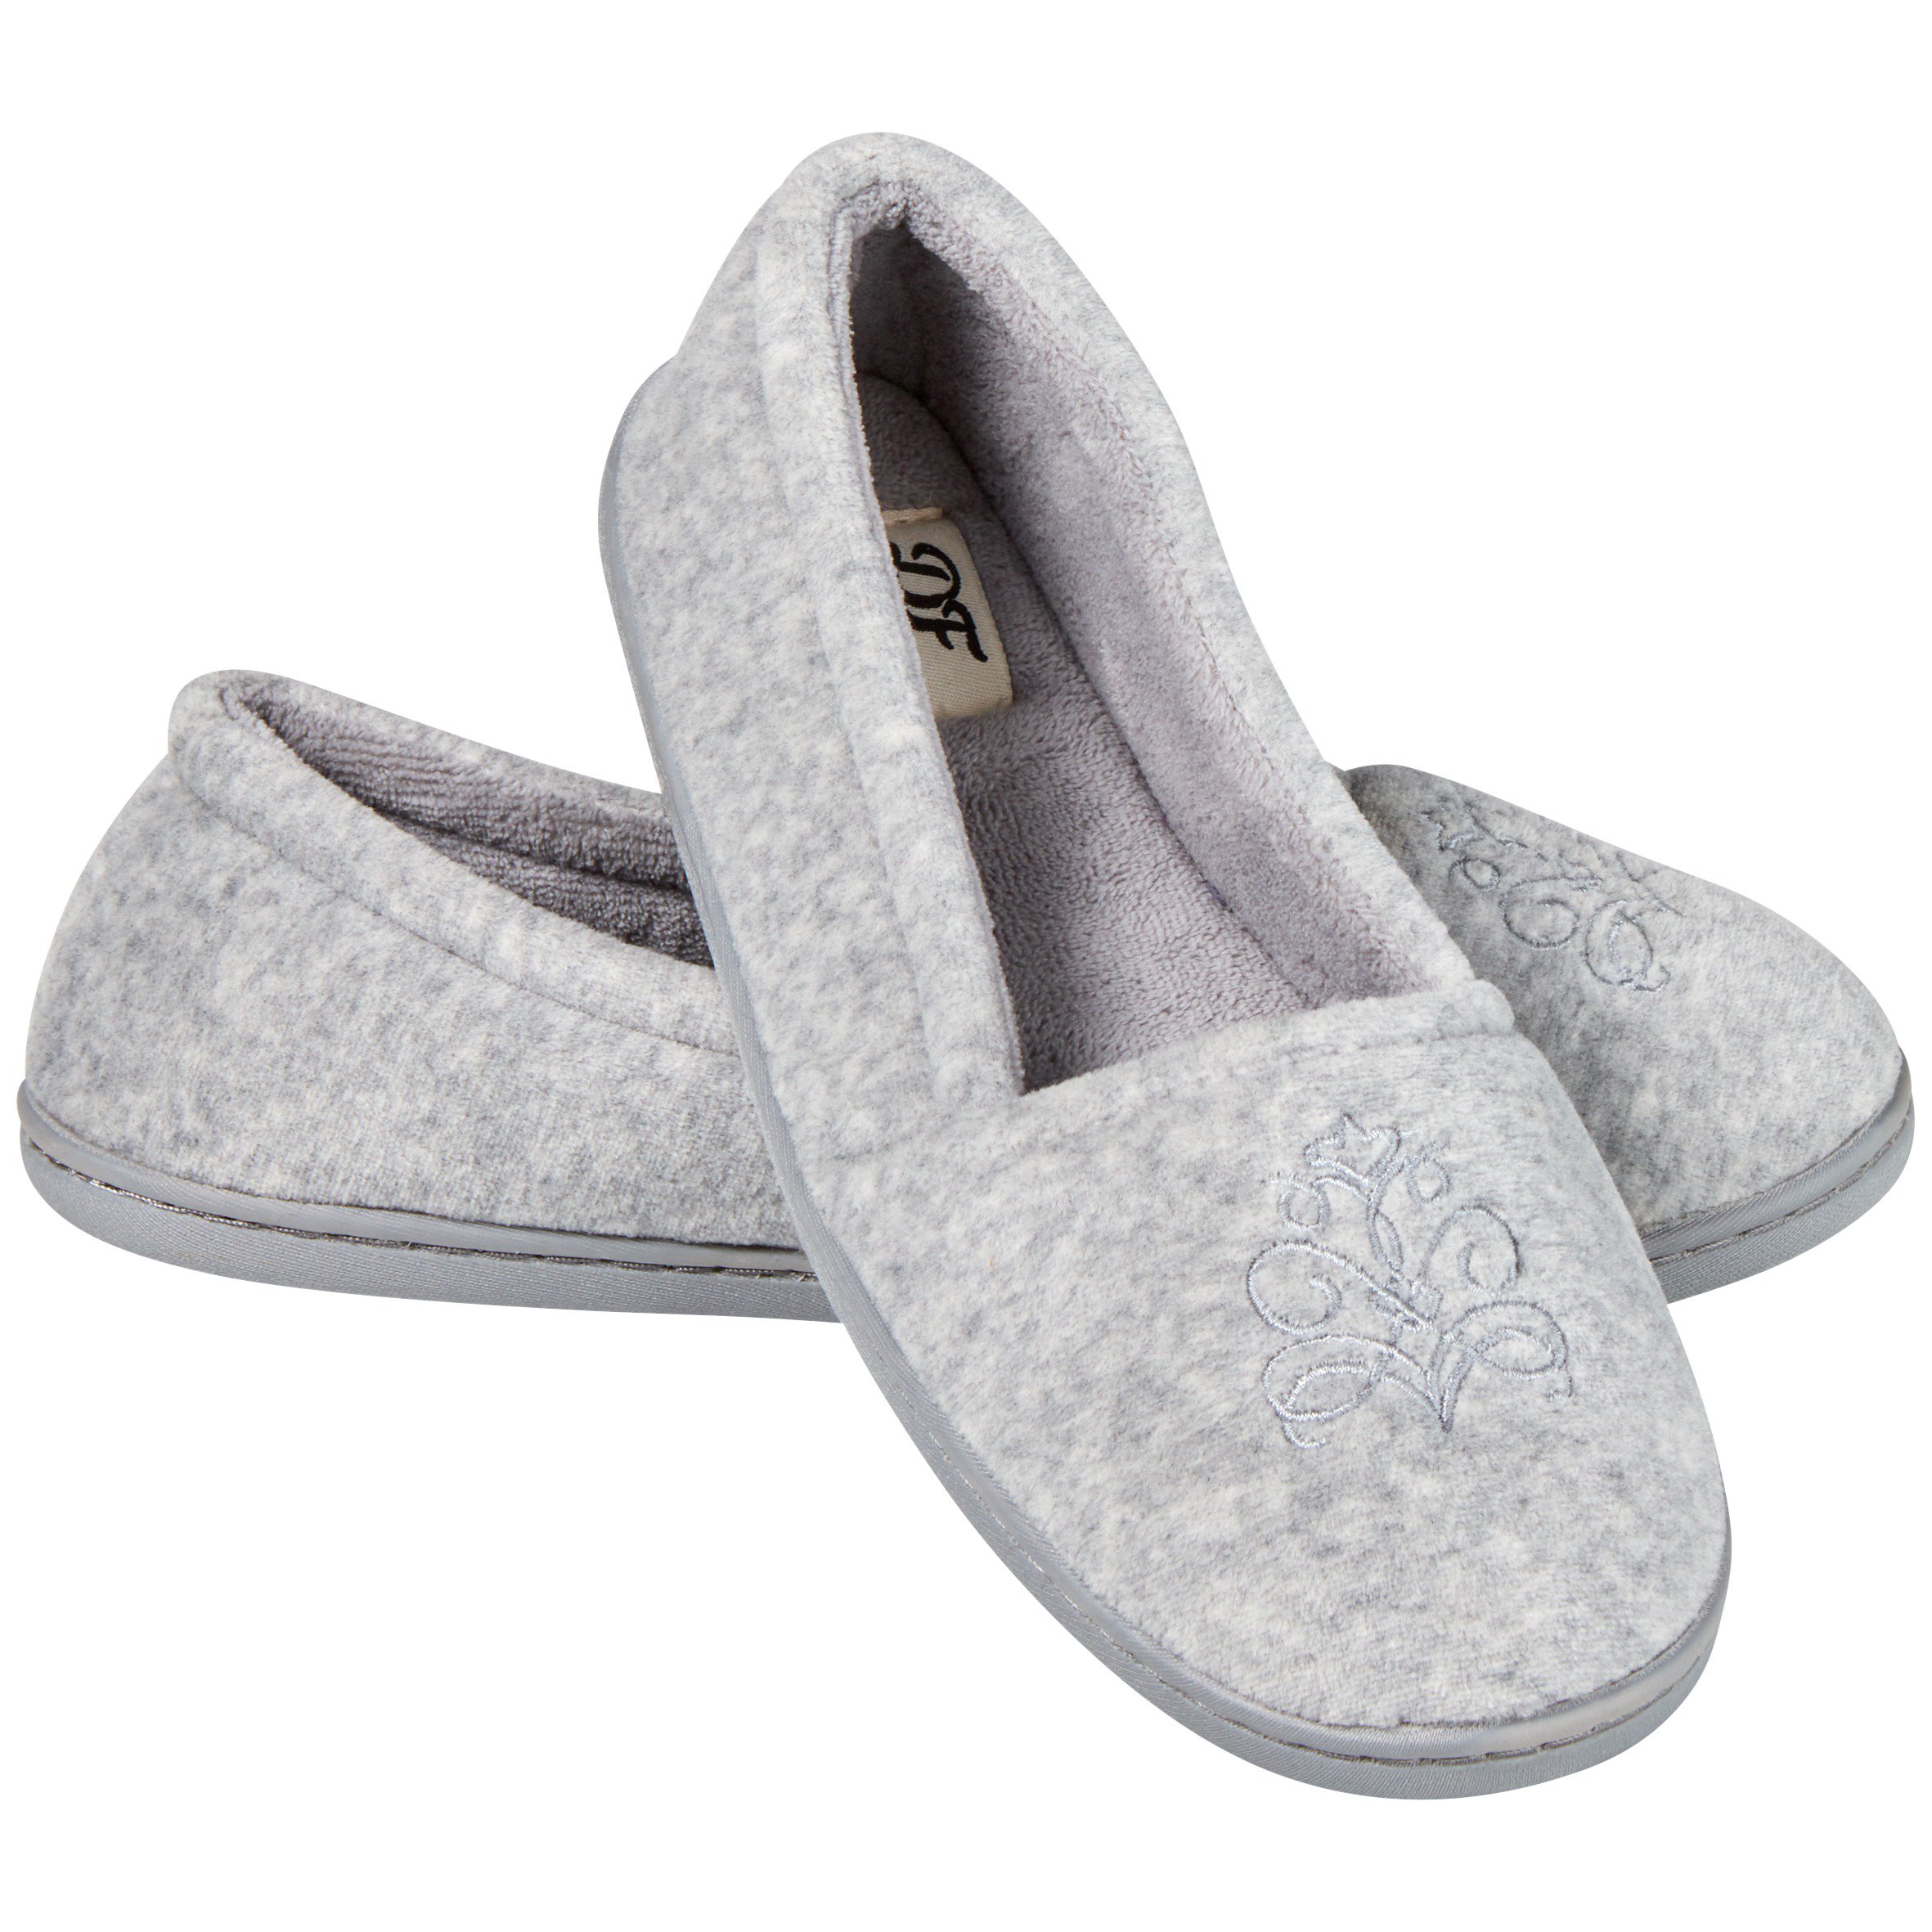 DearFoam Women's Grey Velour Closed Back Slippers - Shop Shoes at H-E-B